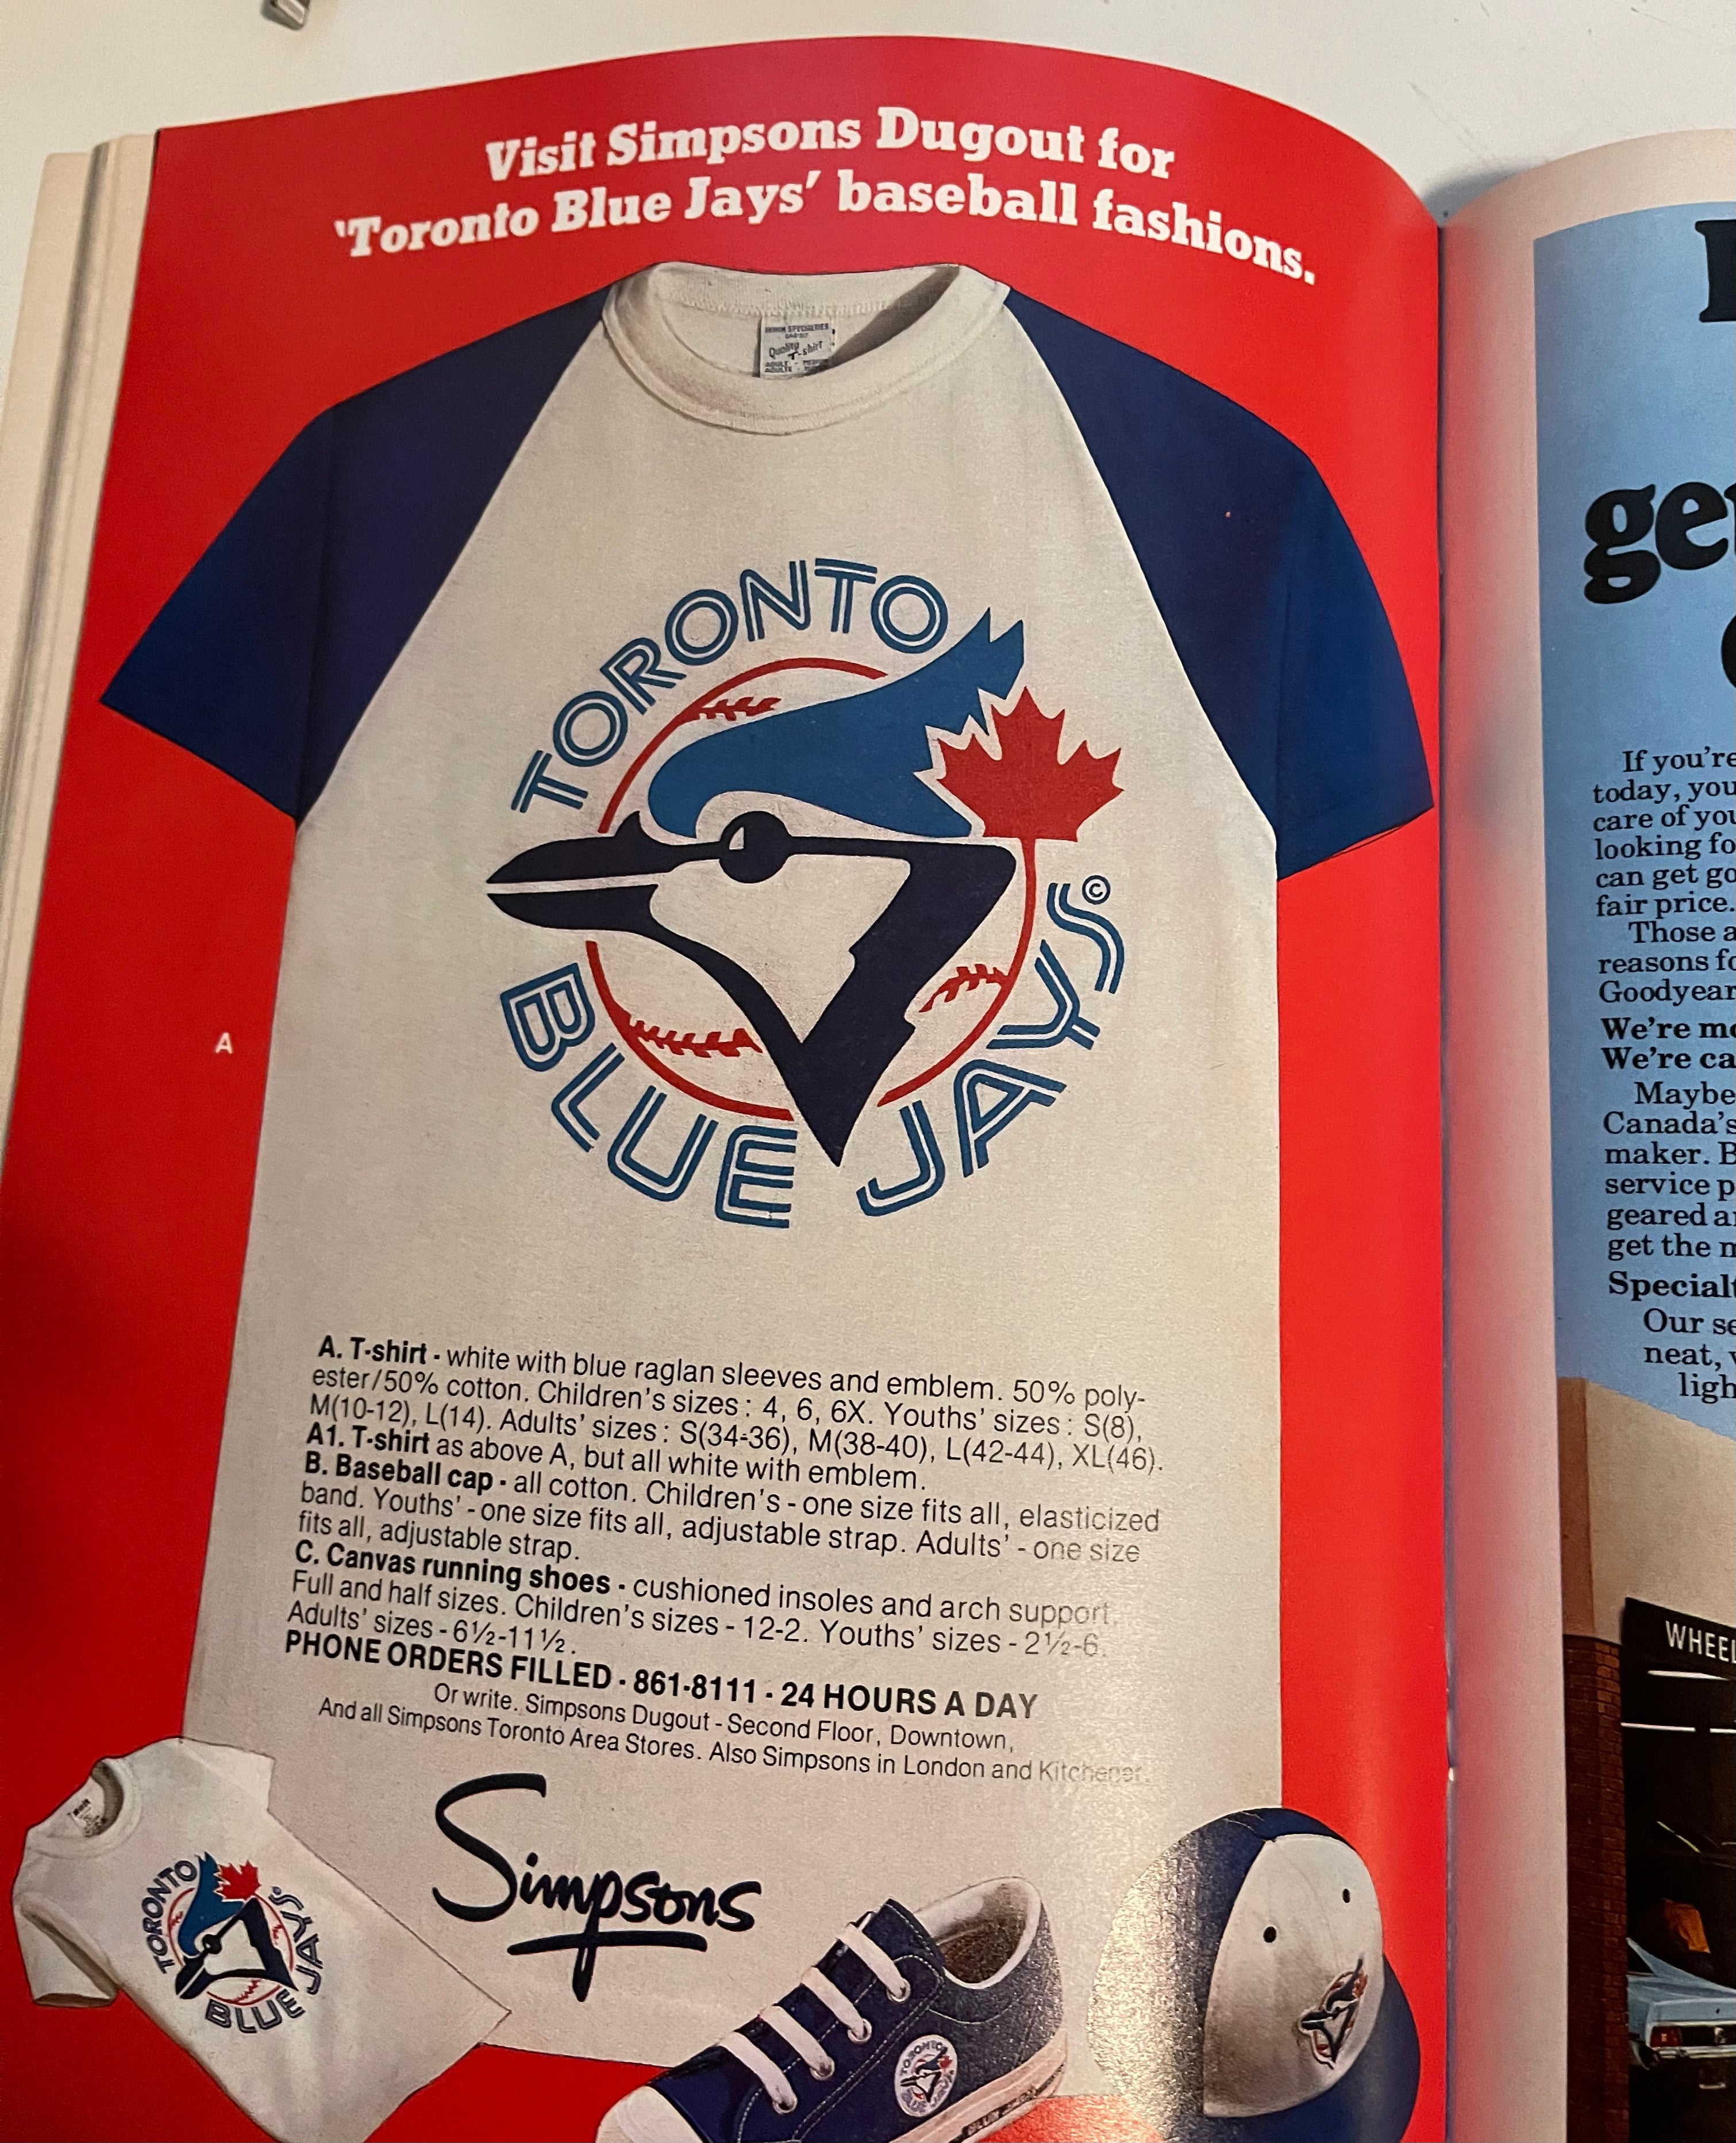 Toronto Blue Jays baseball first game program with ticket 1977